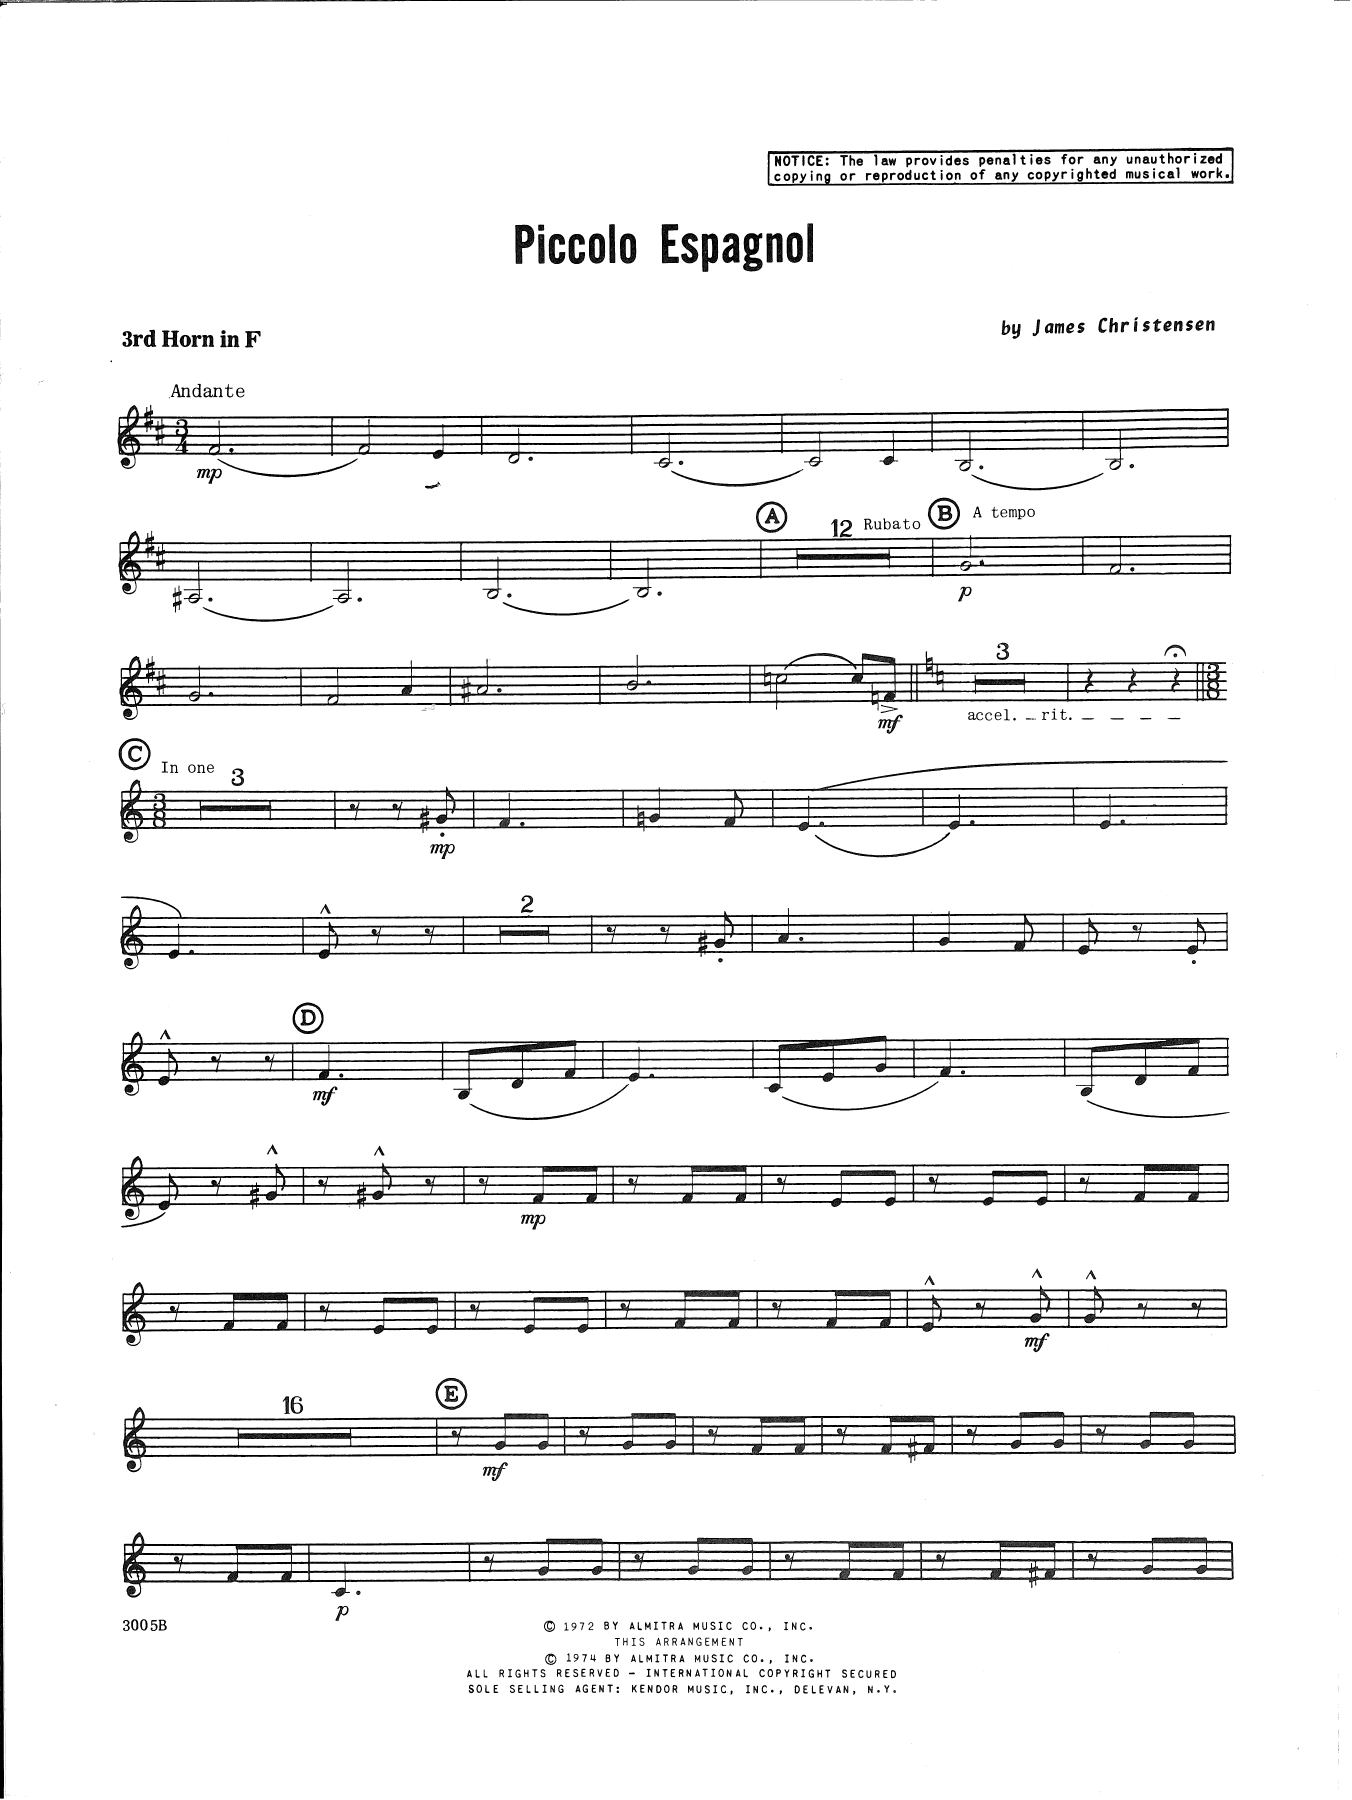 Download James Christensen Piccolo Espagnol - 3rd Horn in F Sheet Music